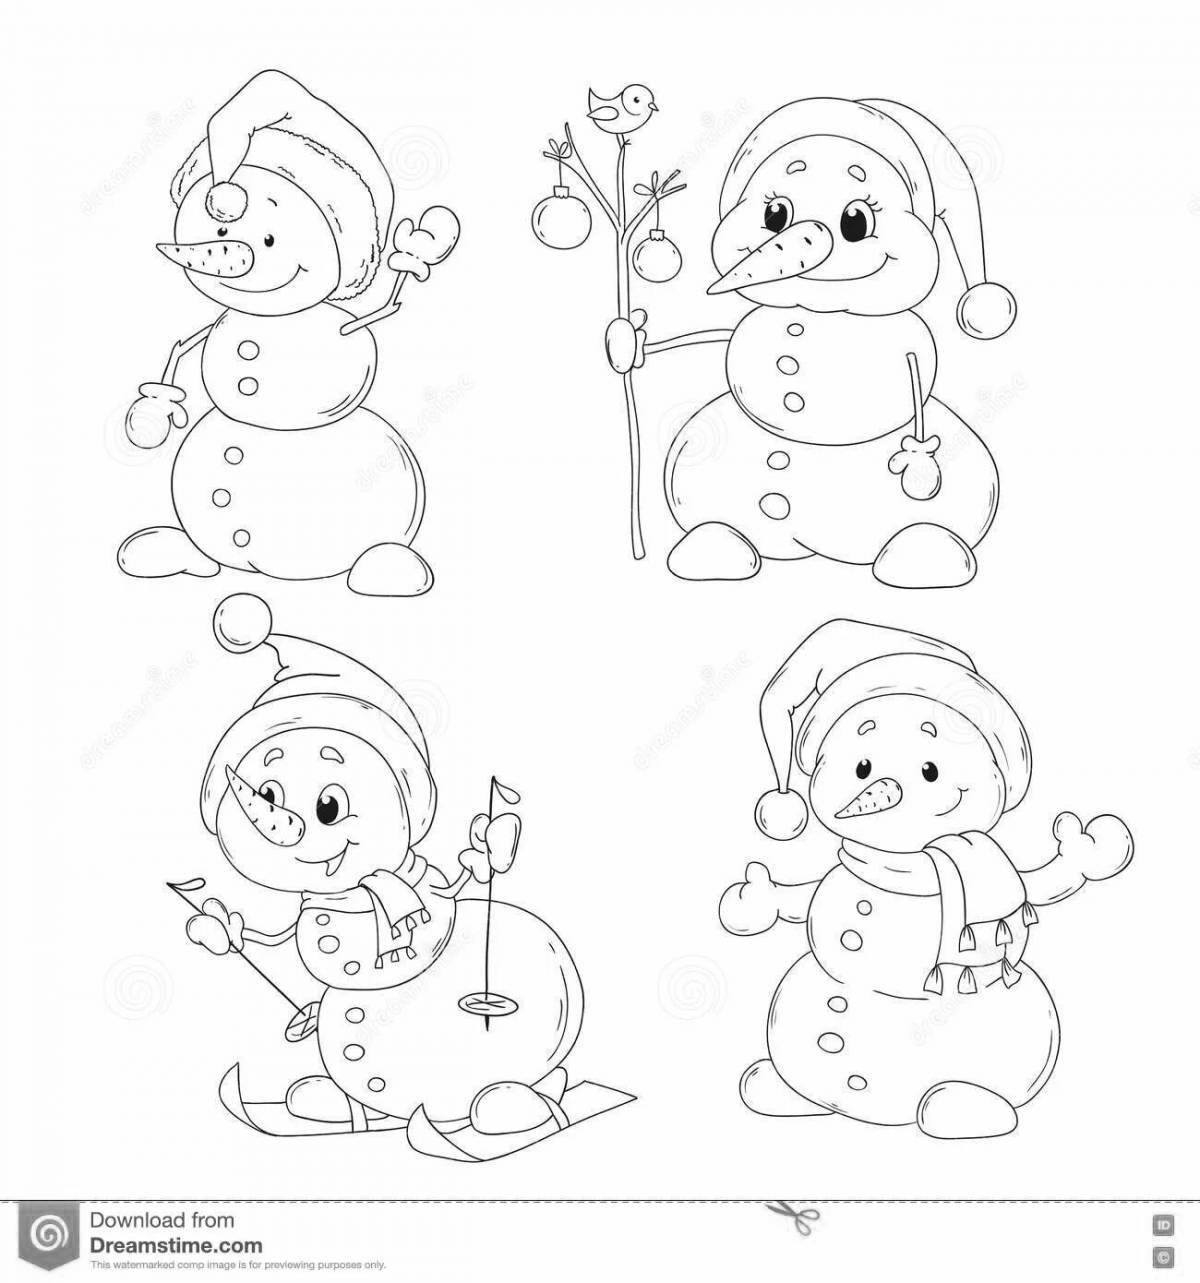 Magic coloring cute snowman